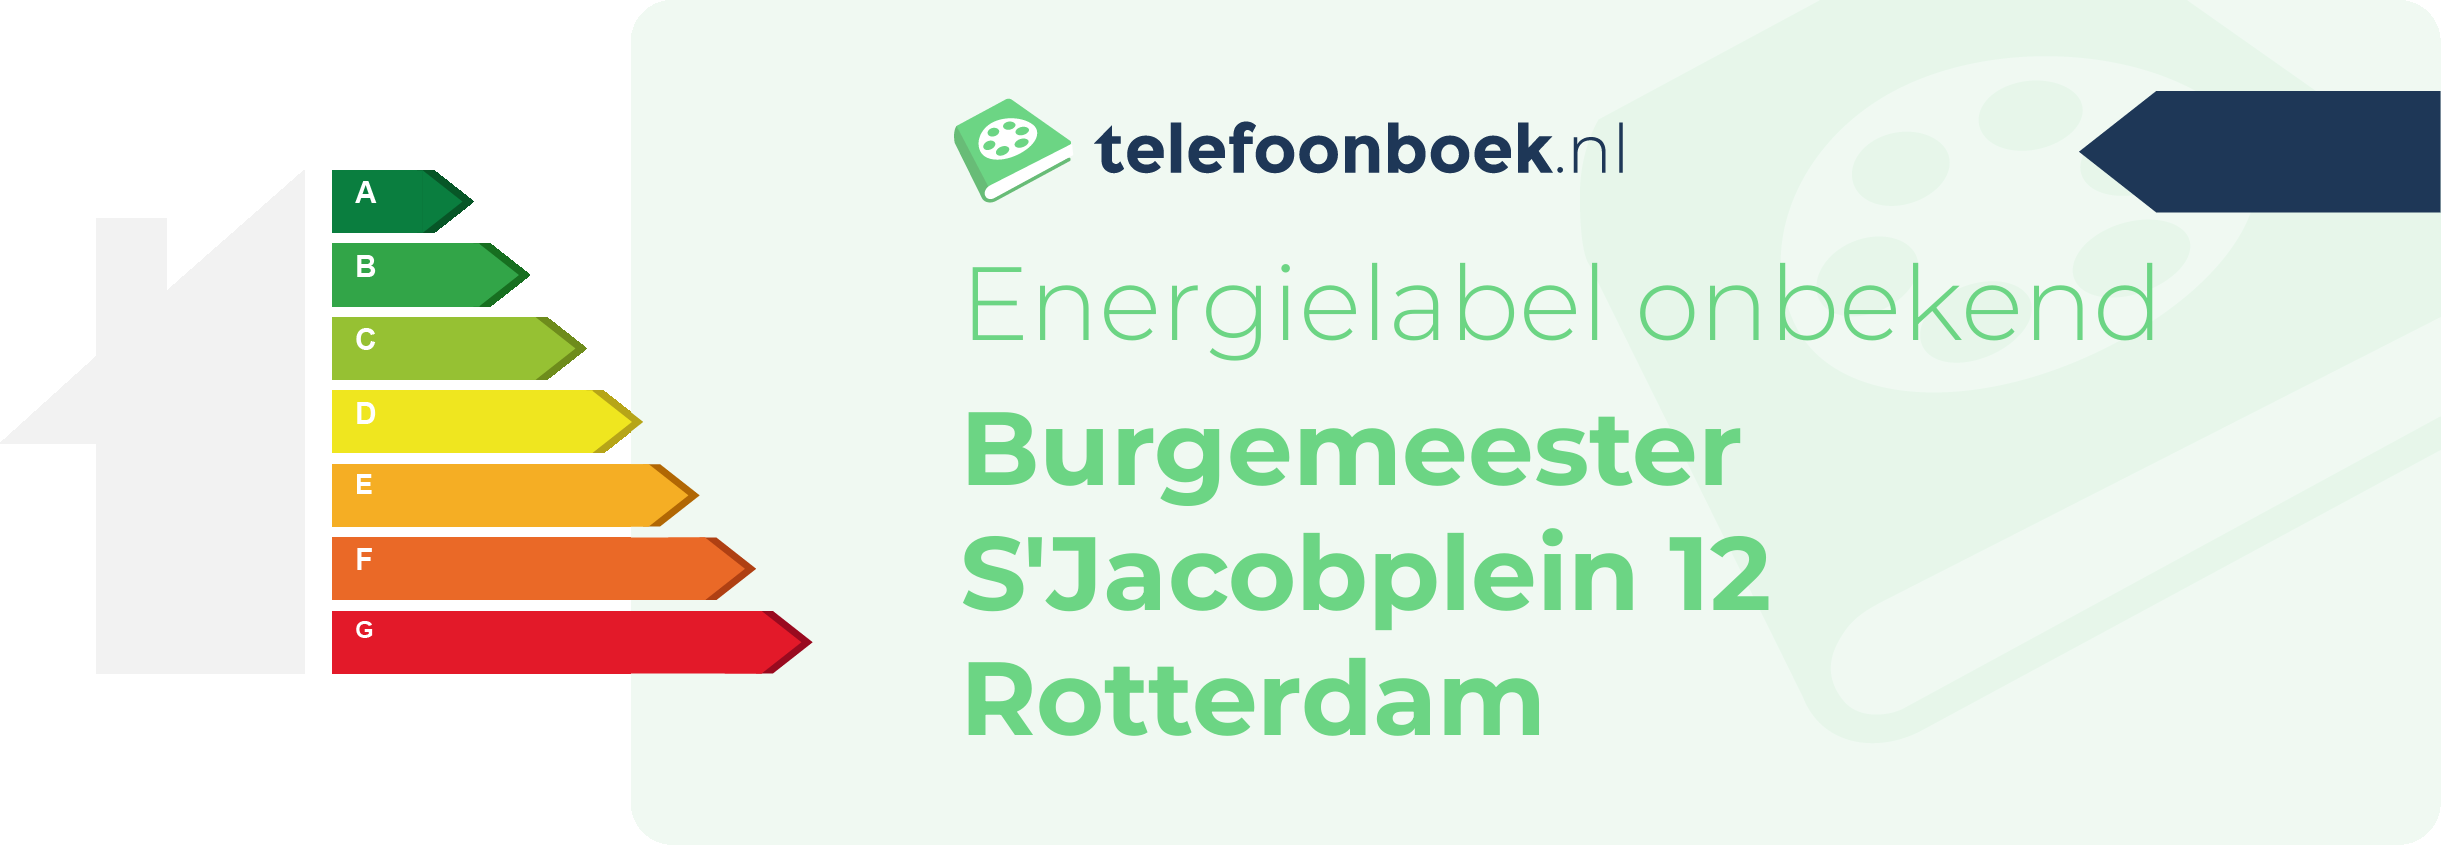 Energielabel Burgemeester S'Jacobplein 12 Rotterdam